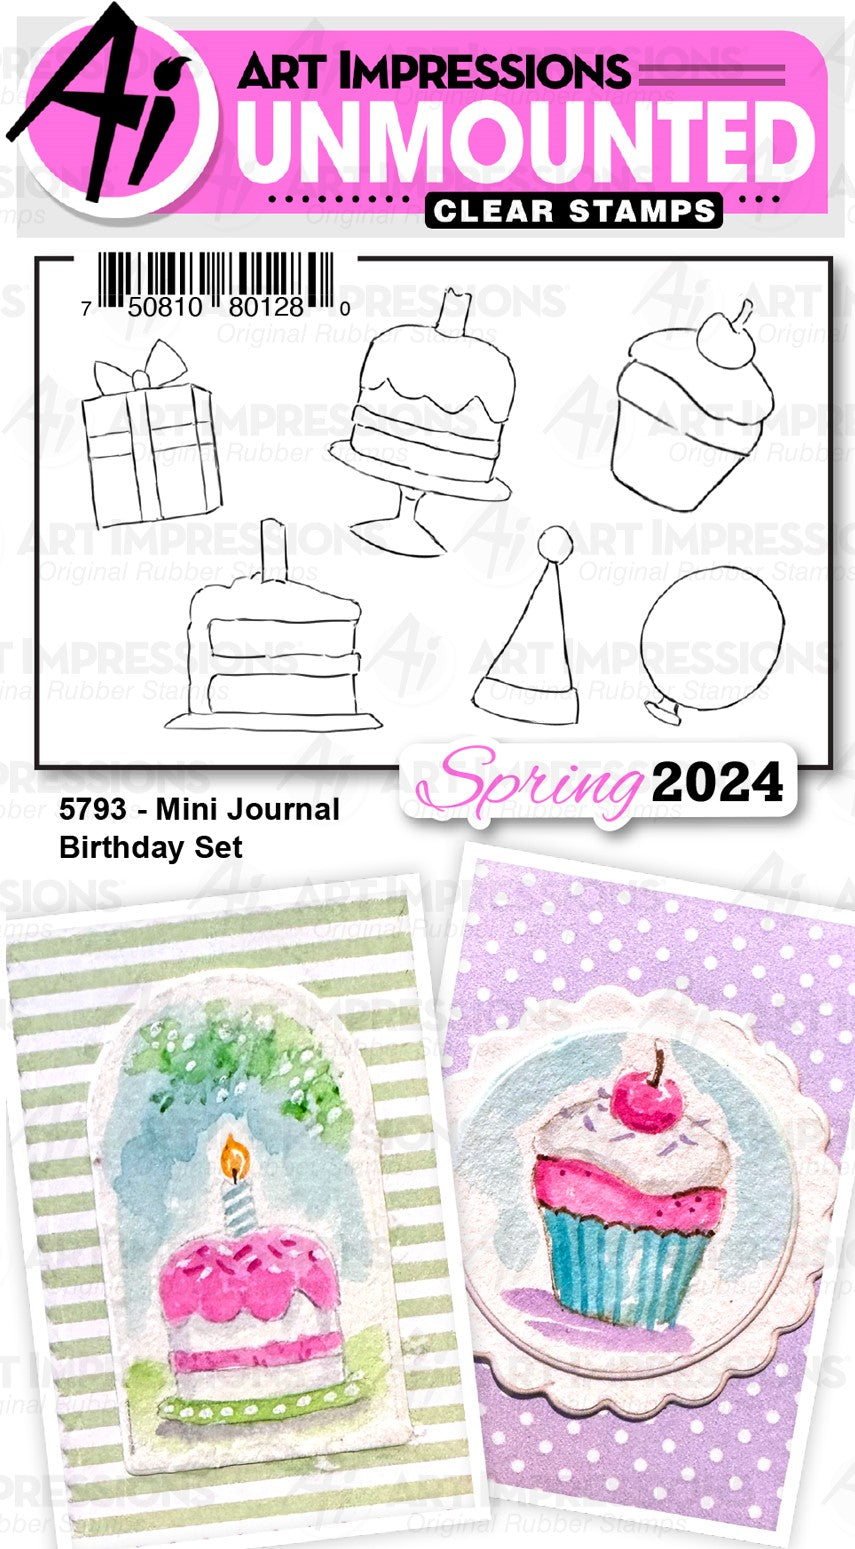 Art Impressions - 5793 Mini Journal Birthday Set